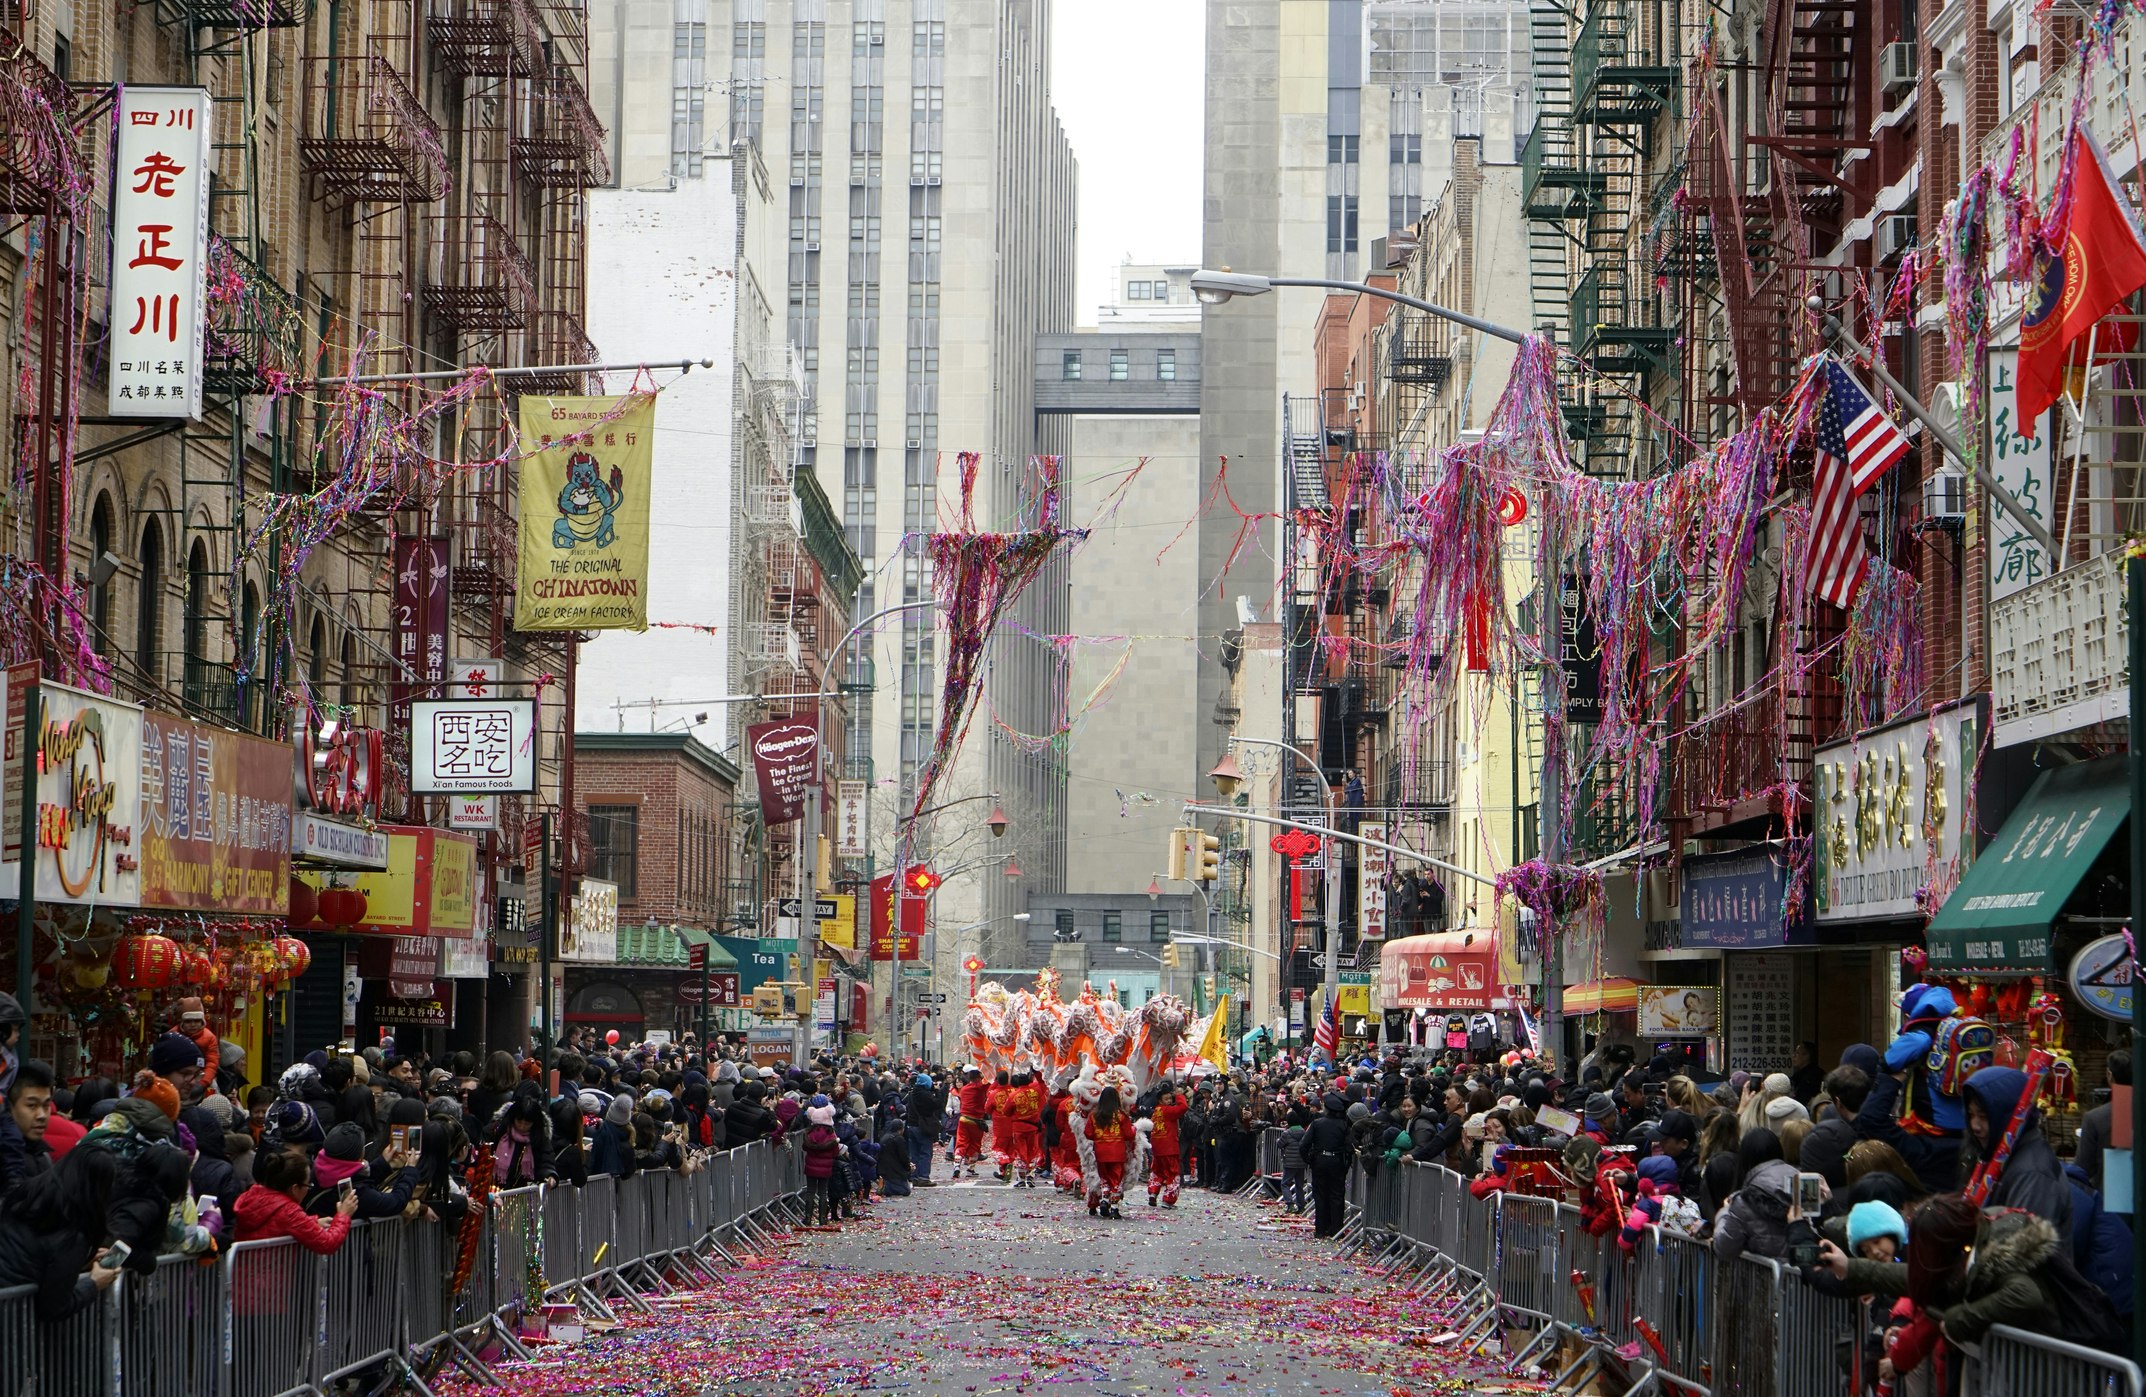 Chinese New Year celebration in New York's Chinatown